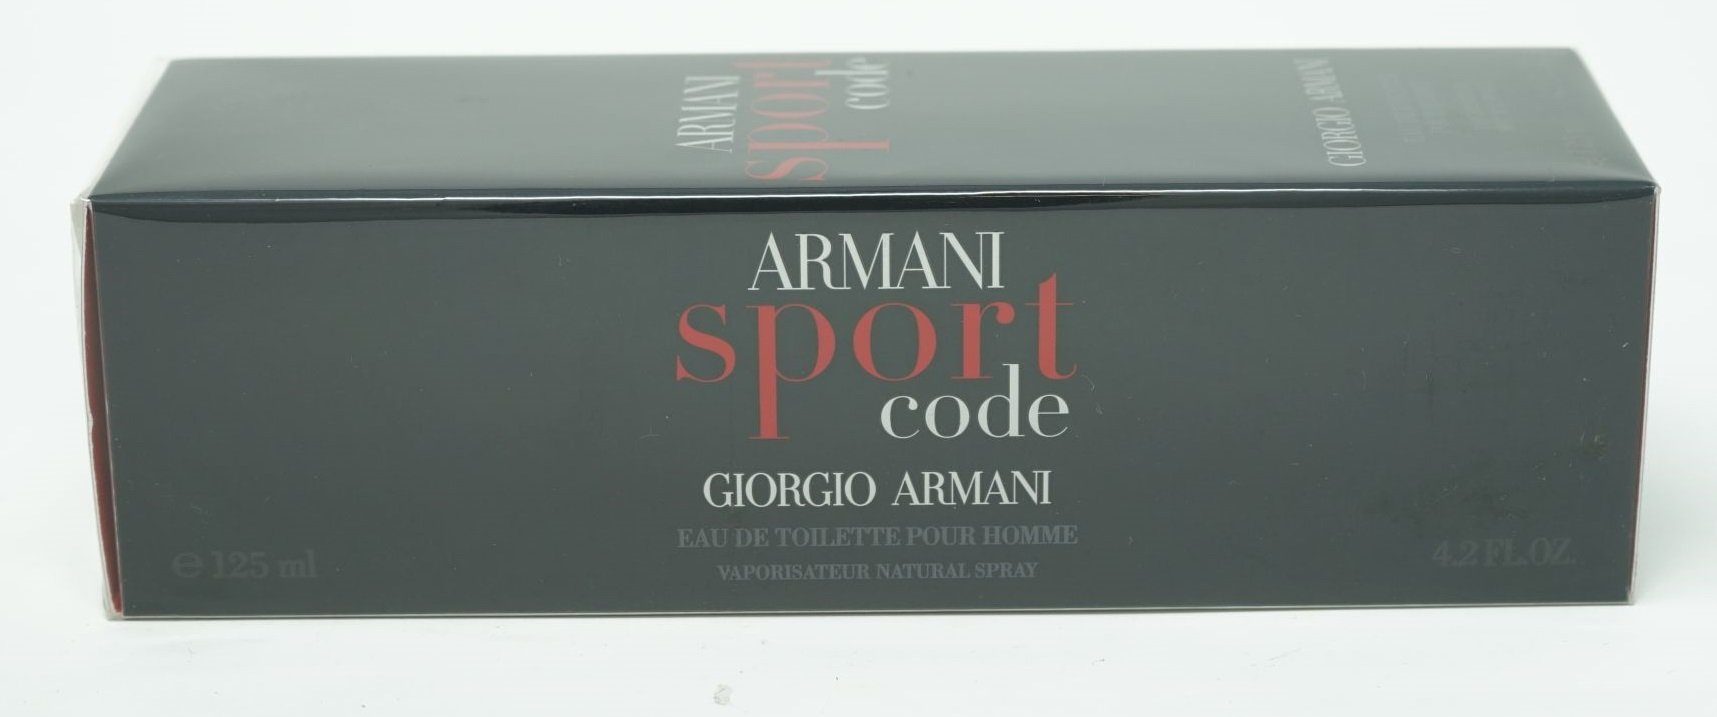 Homme Giorgio Toilette de Code 125 Sport Giorgio Toilette ml Armani Pour de Eau Eau Armani